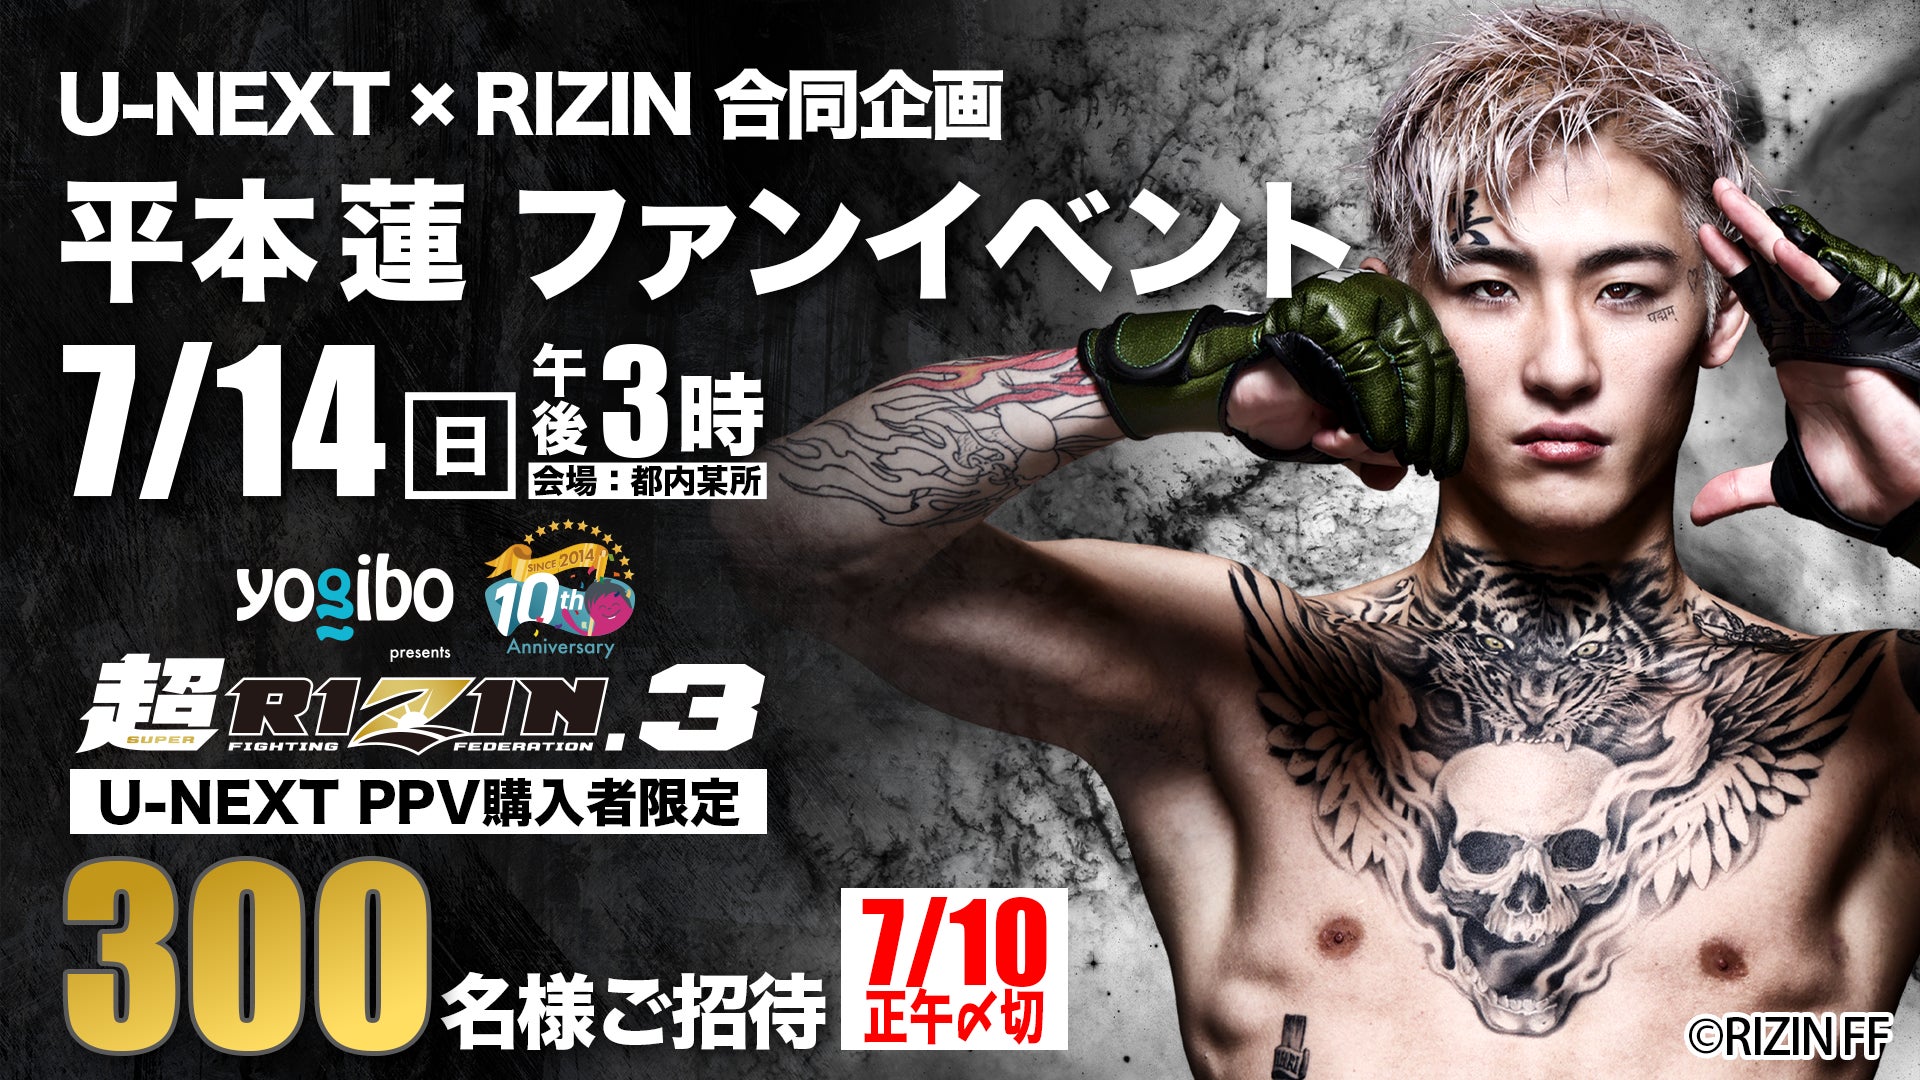 U-NEXT×RIZIN企画第1弾！『Yogibo presents 超RIZIN.3』配信チケット購入者限定「U-NEXT x RIZIN 合同企画 平本蓮選手ファンイベント」抽選で300名ご招待！